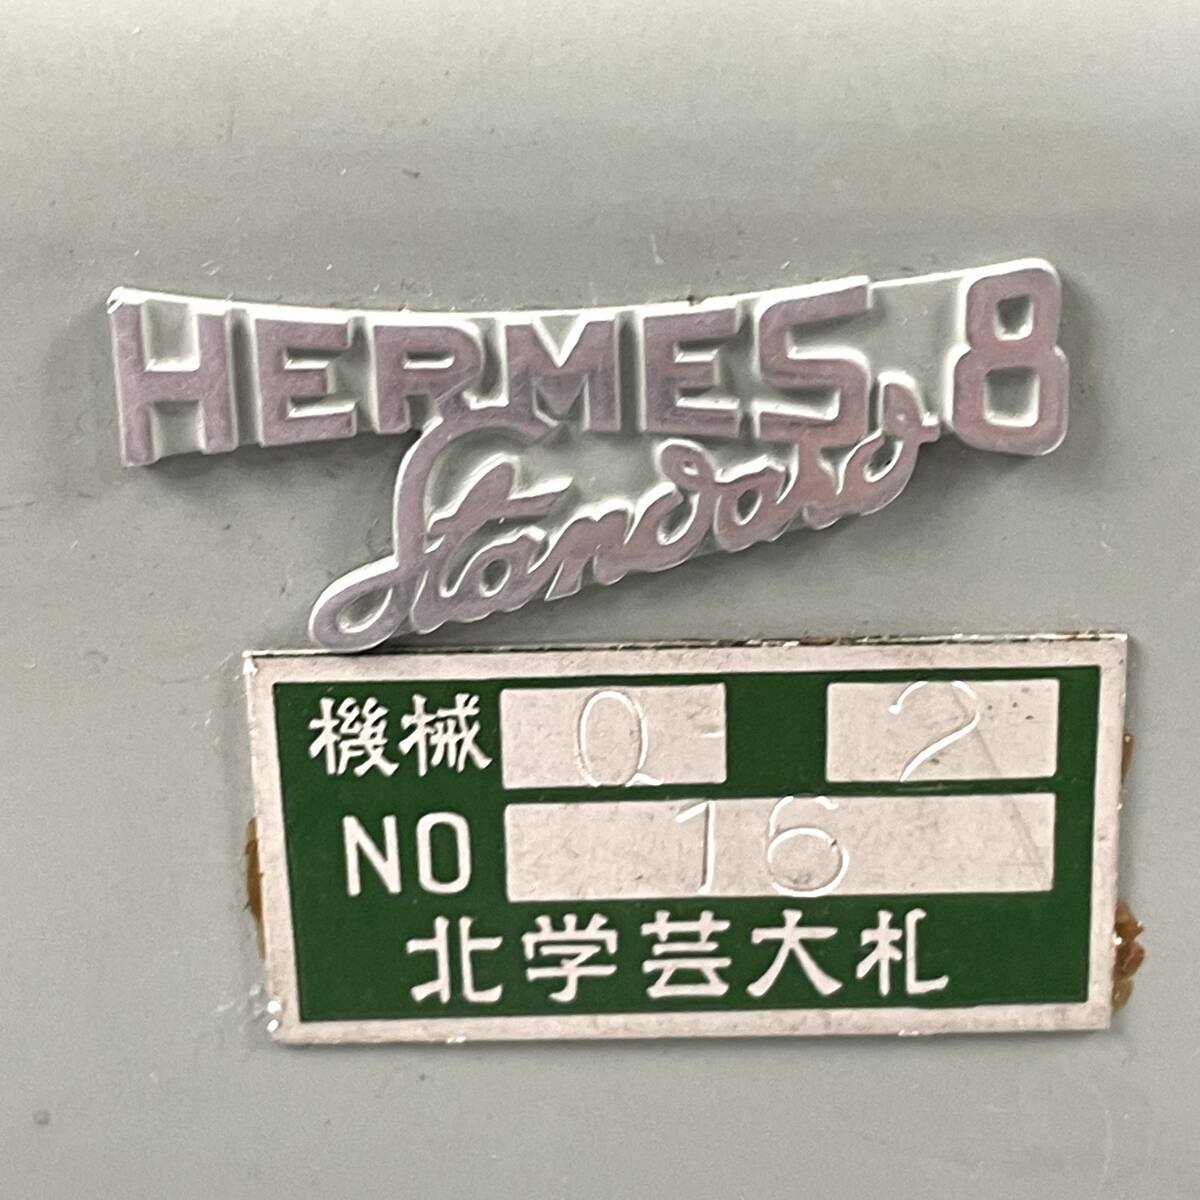 HERMES タイプライター Standard 8 カバー付き エルメス【現状販売品】24D 北TM3_画像8